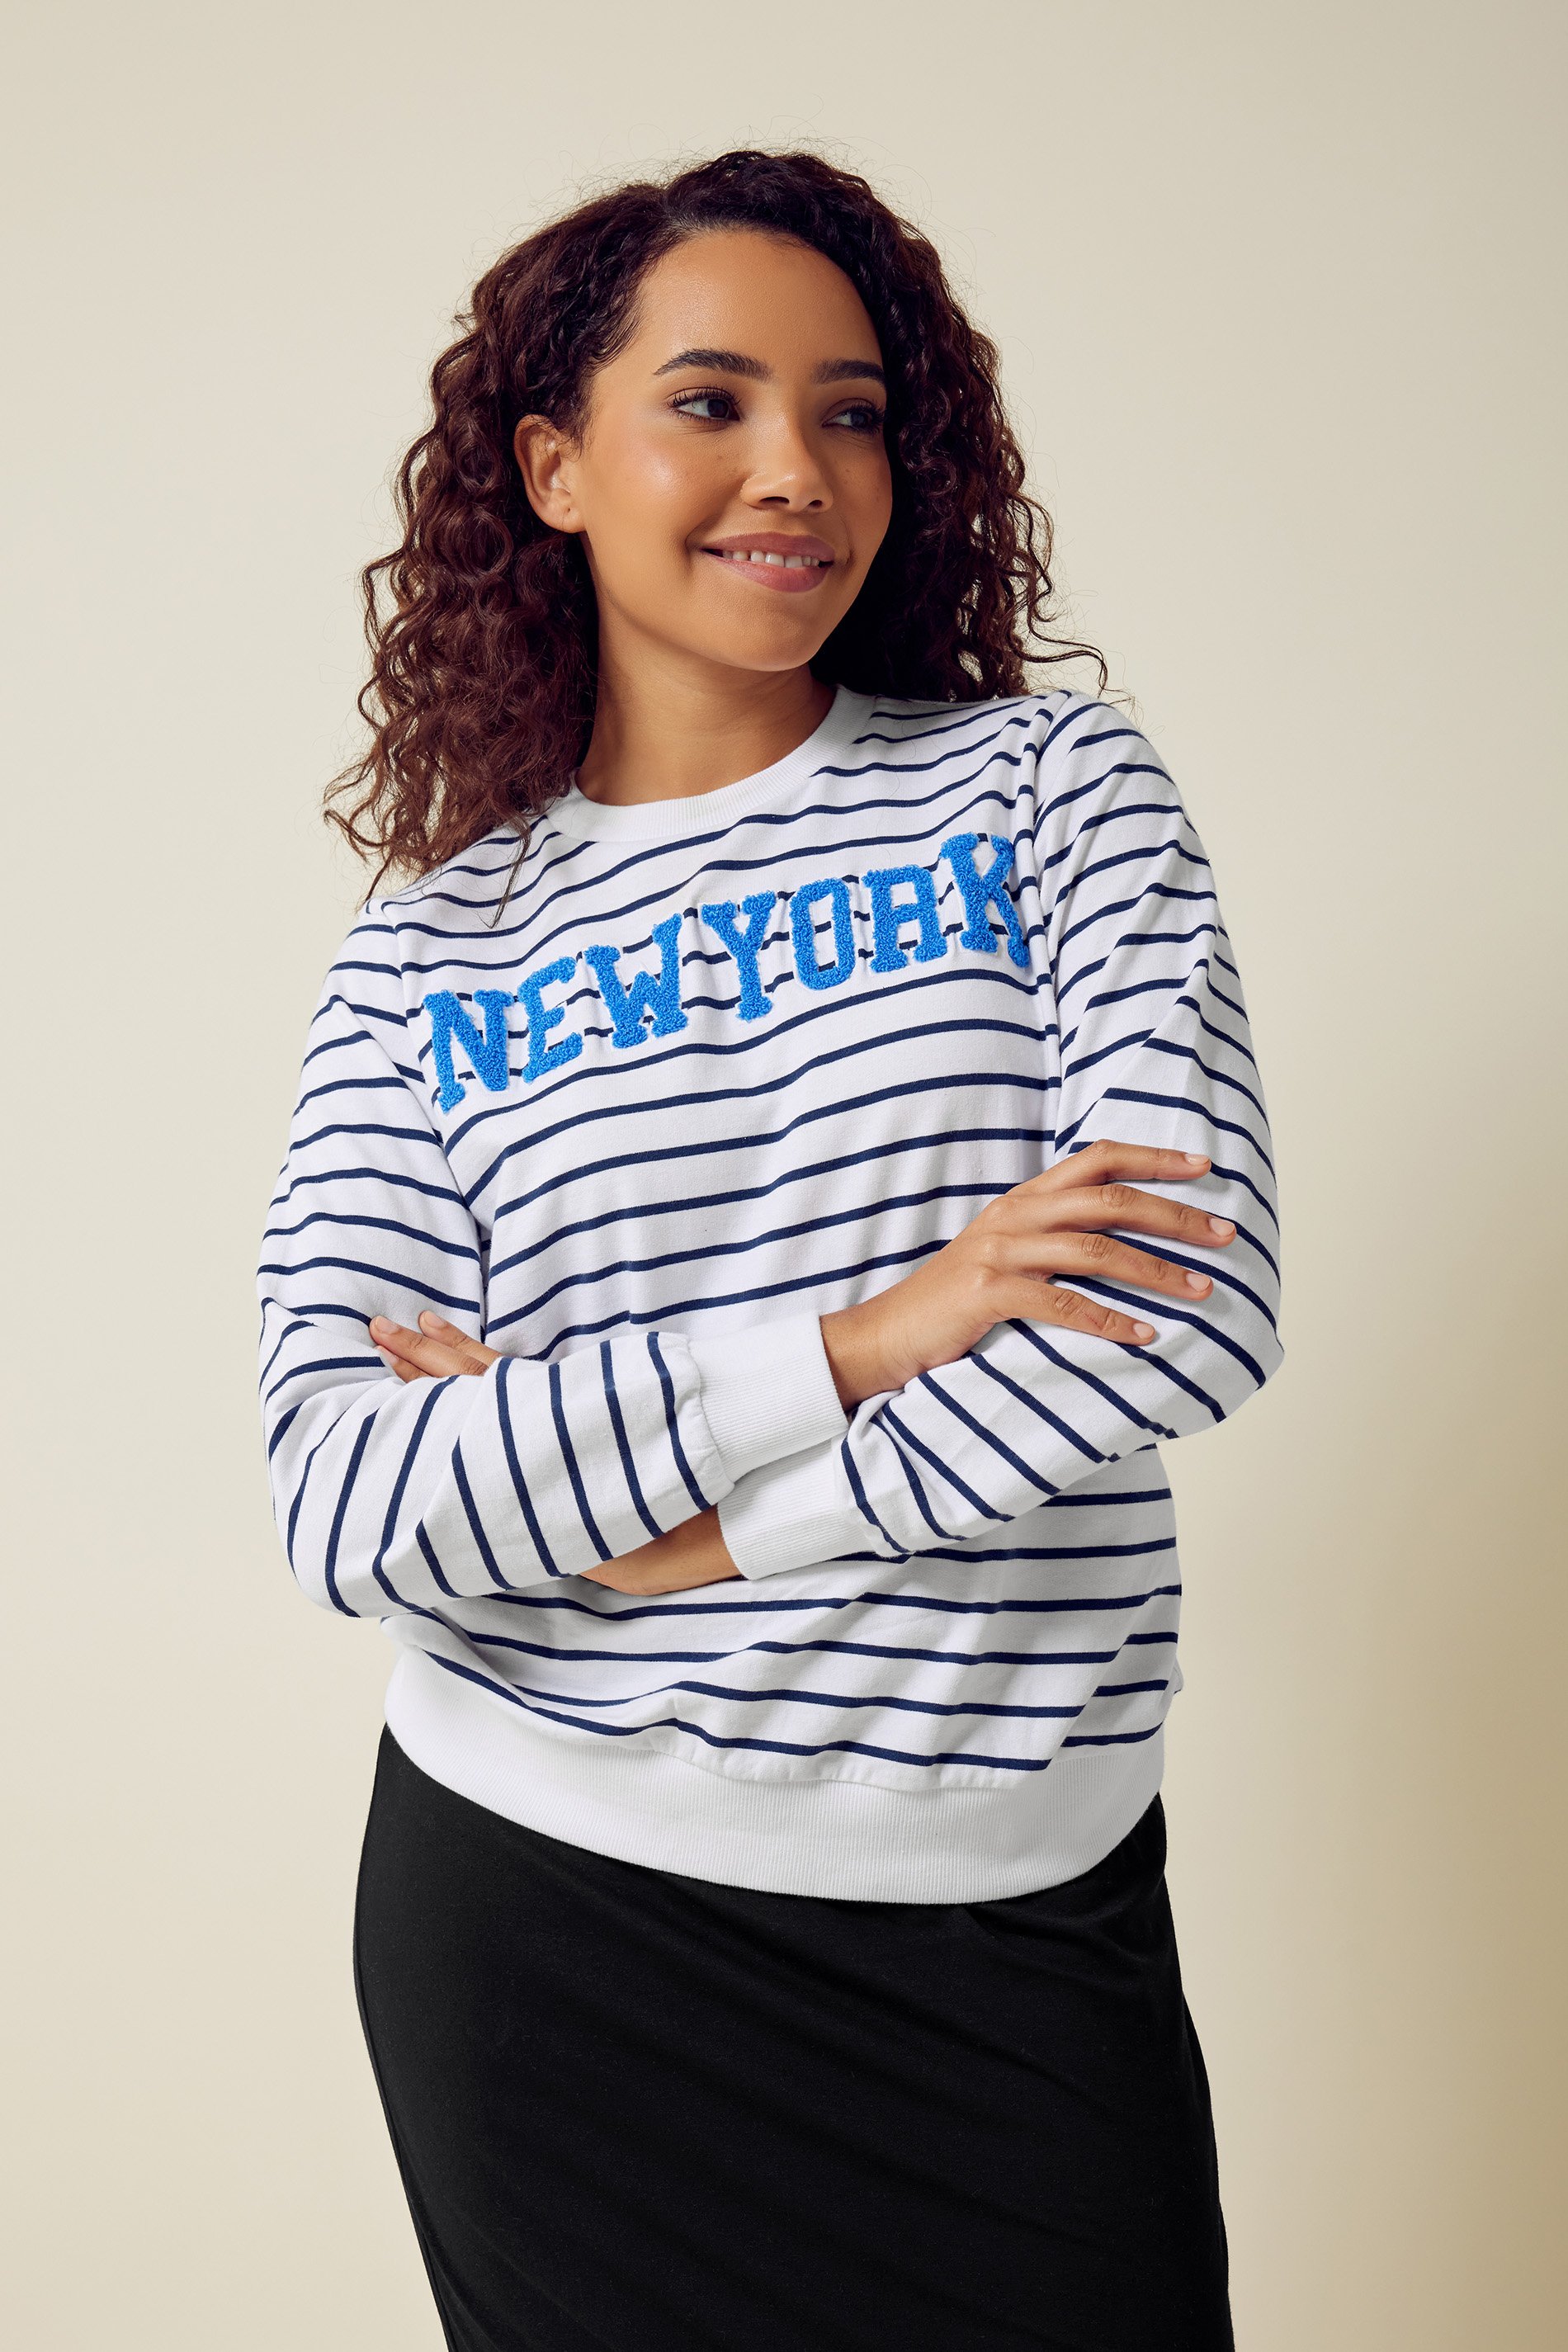 M&Co White & Navy Striped 'New York' Sweatshirt | M&Co 1